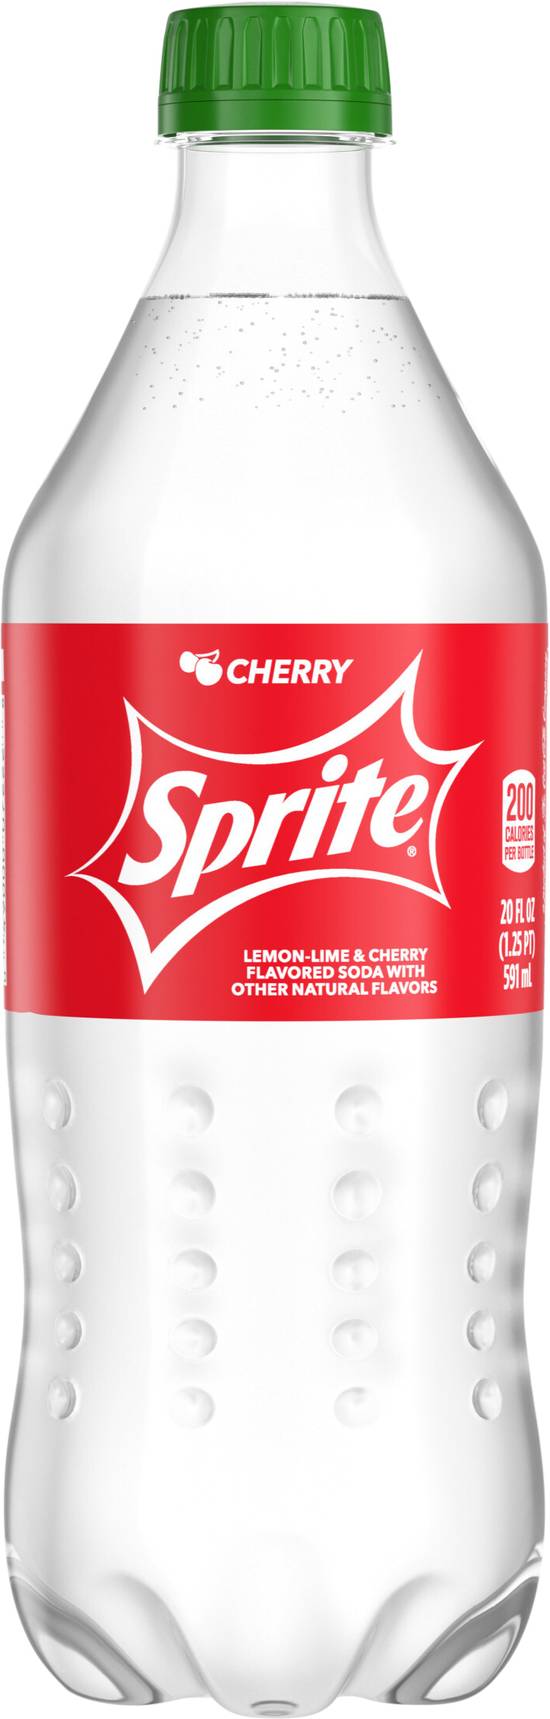 Sprite Cherry Soda (20 fl oz)